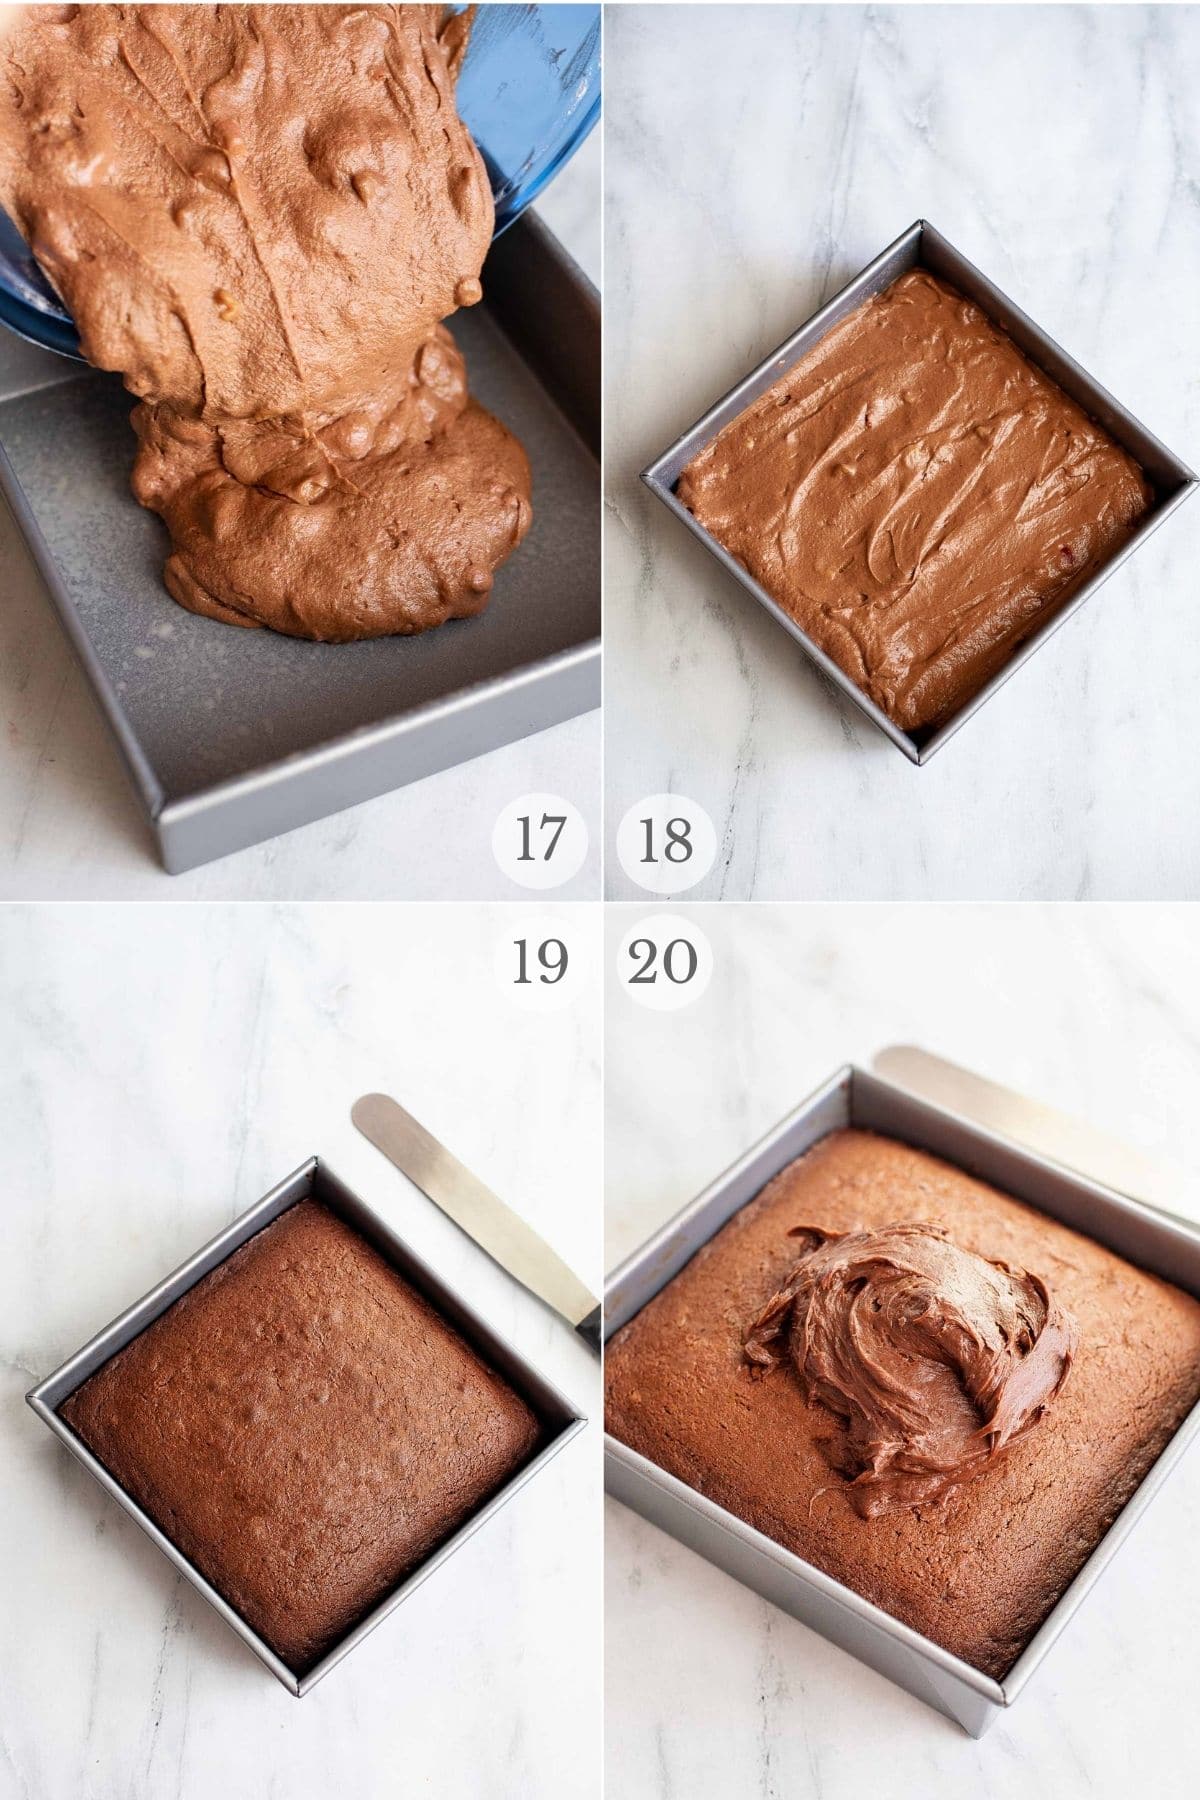 Chocolate Cherry Cake recipe steps 17-20